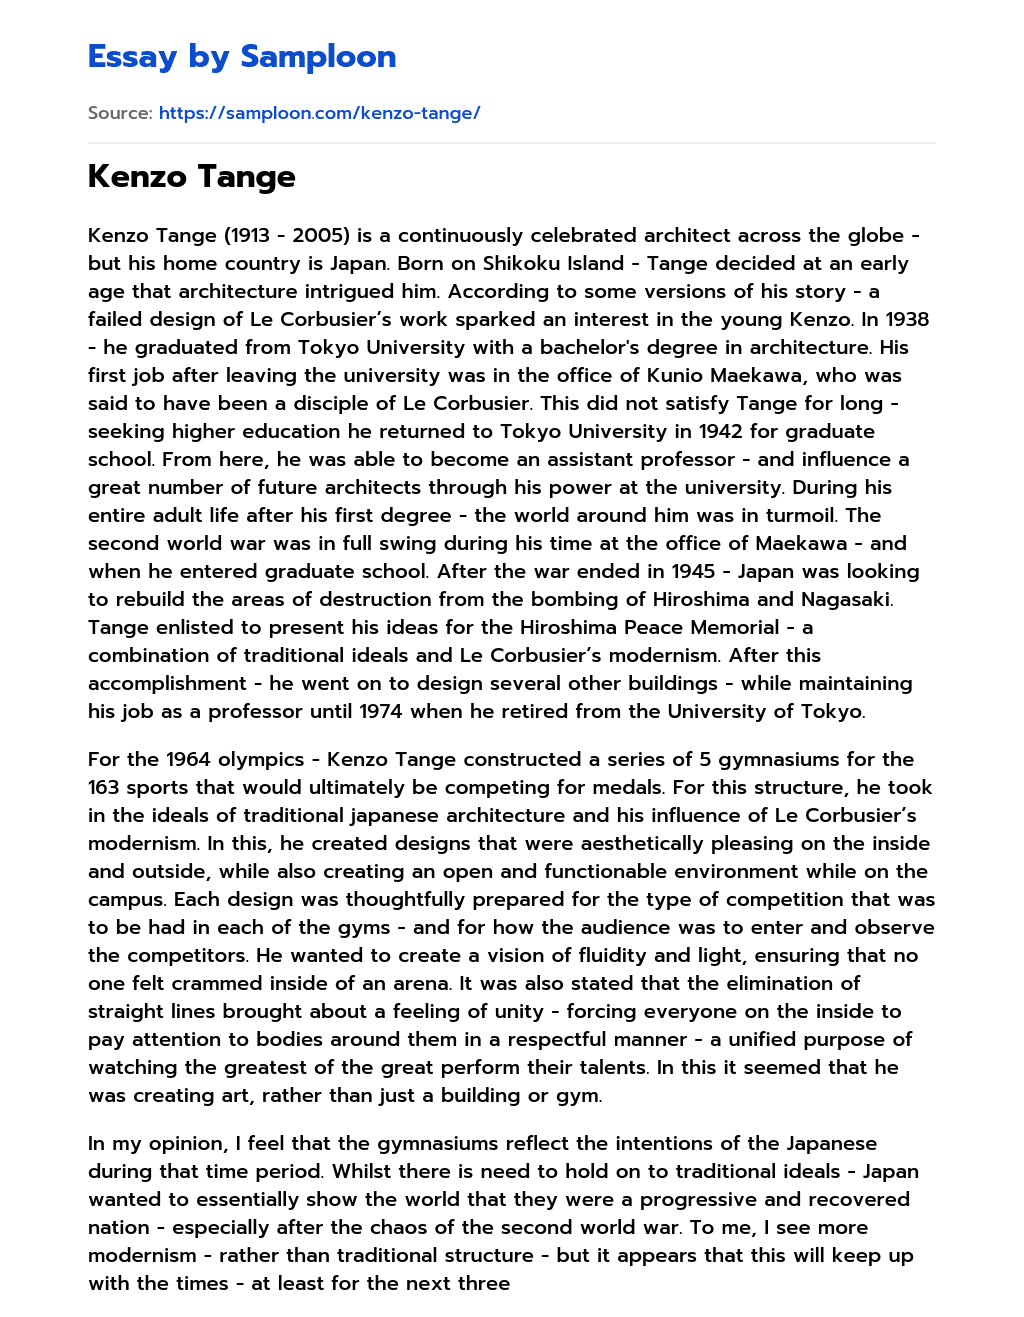 Kenzo Tange essay